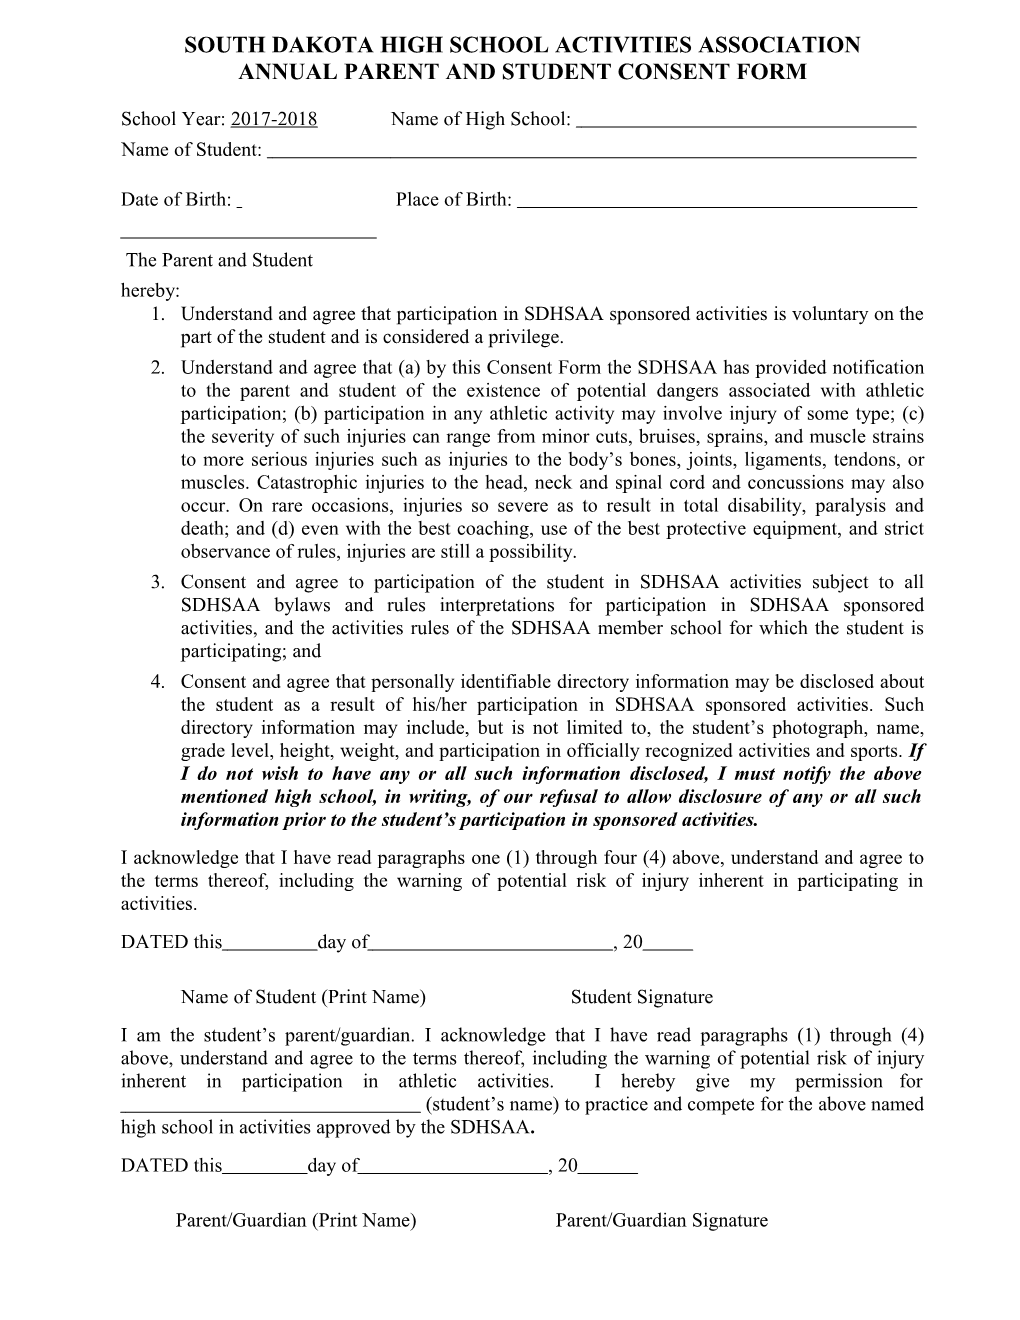 South Dakota High School Activities Association Annual Parent and Student Consent Form